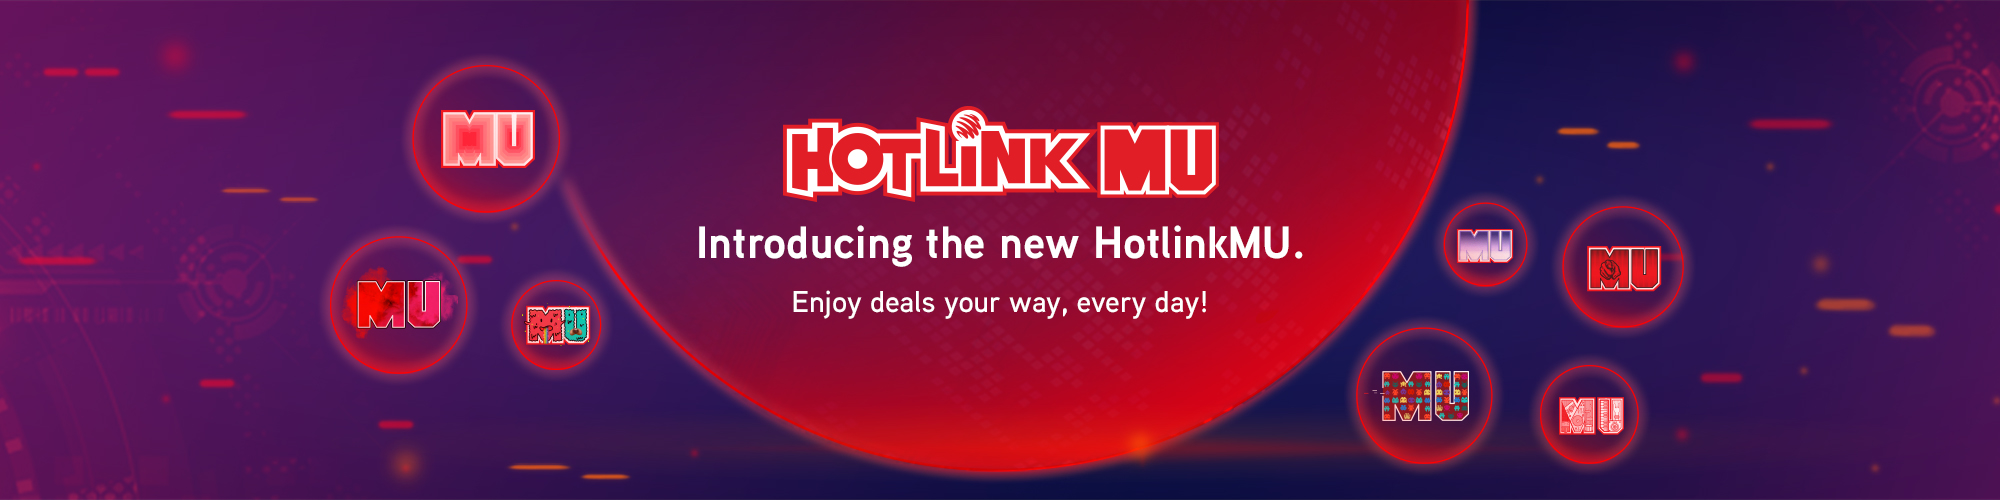 HotlinkMU enjoy deals your way everyday 